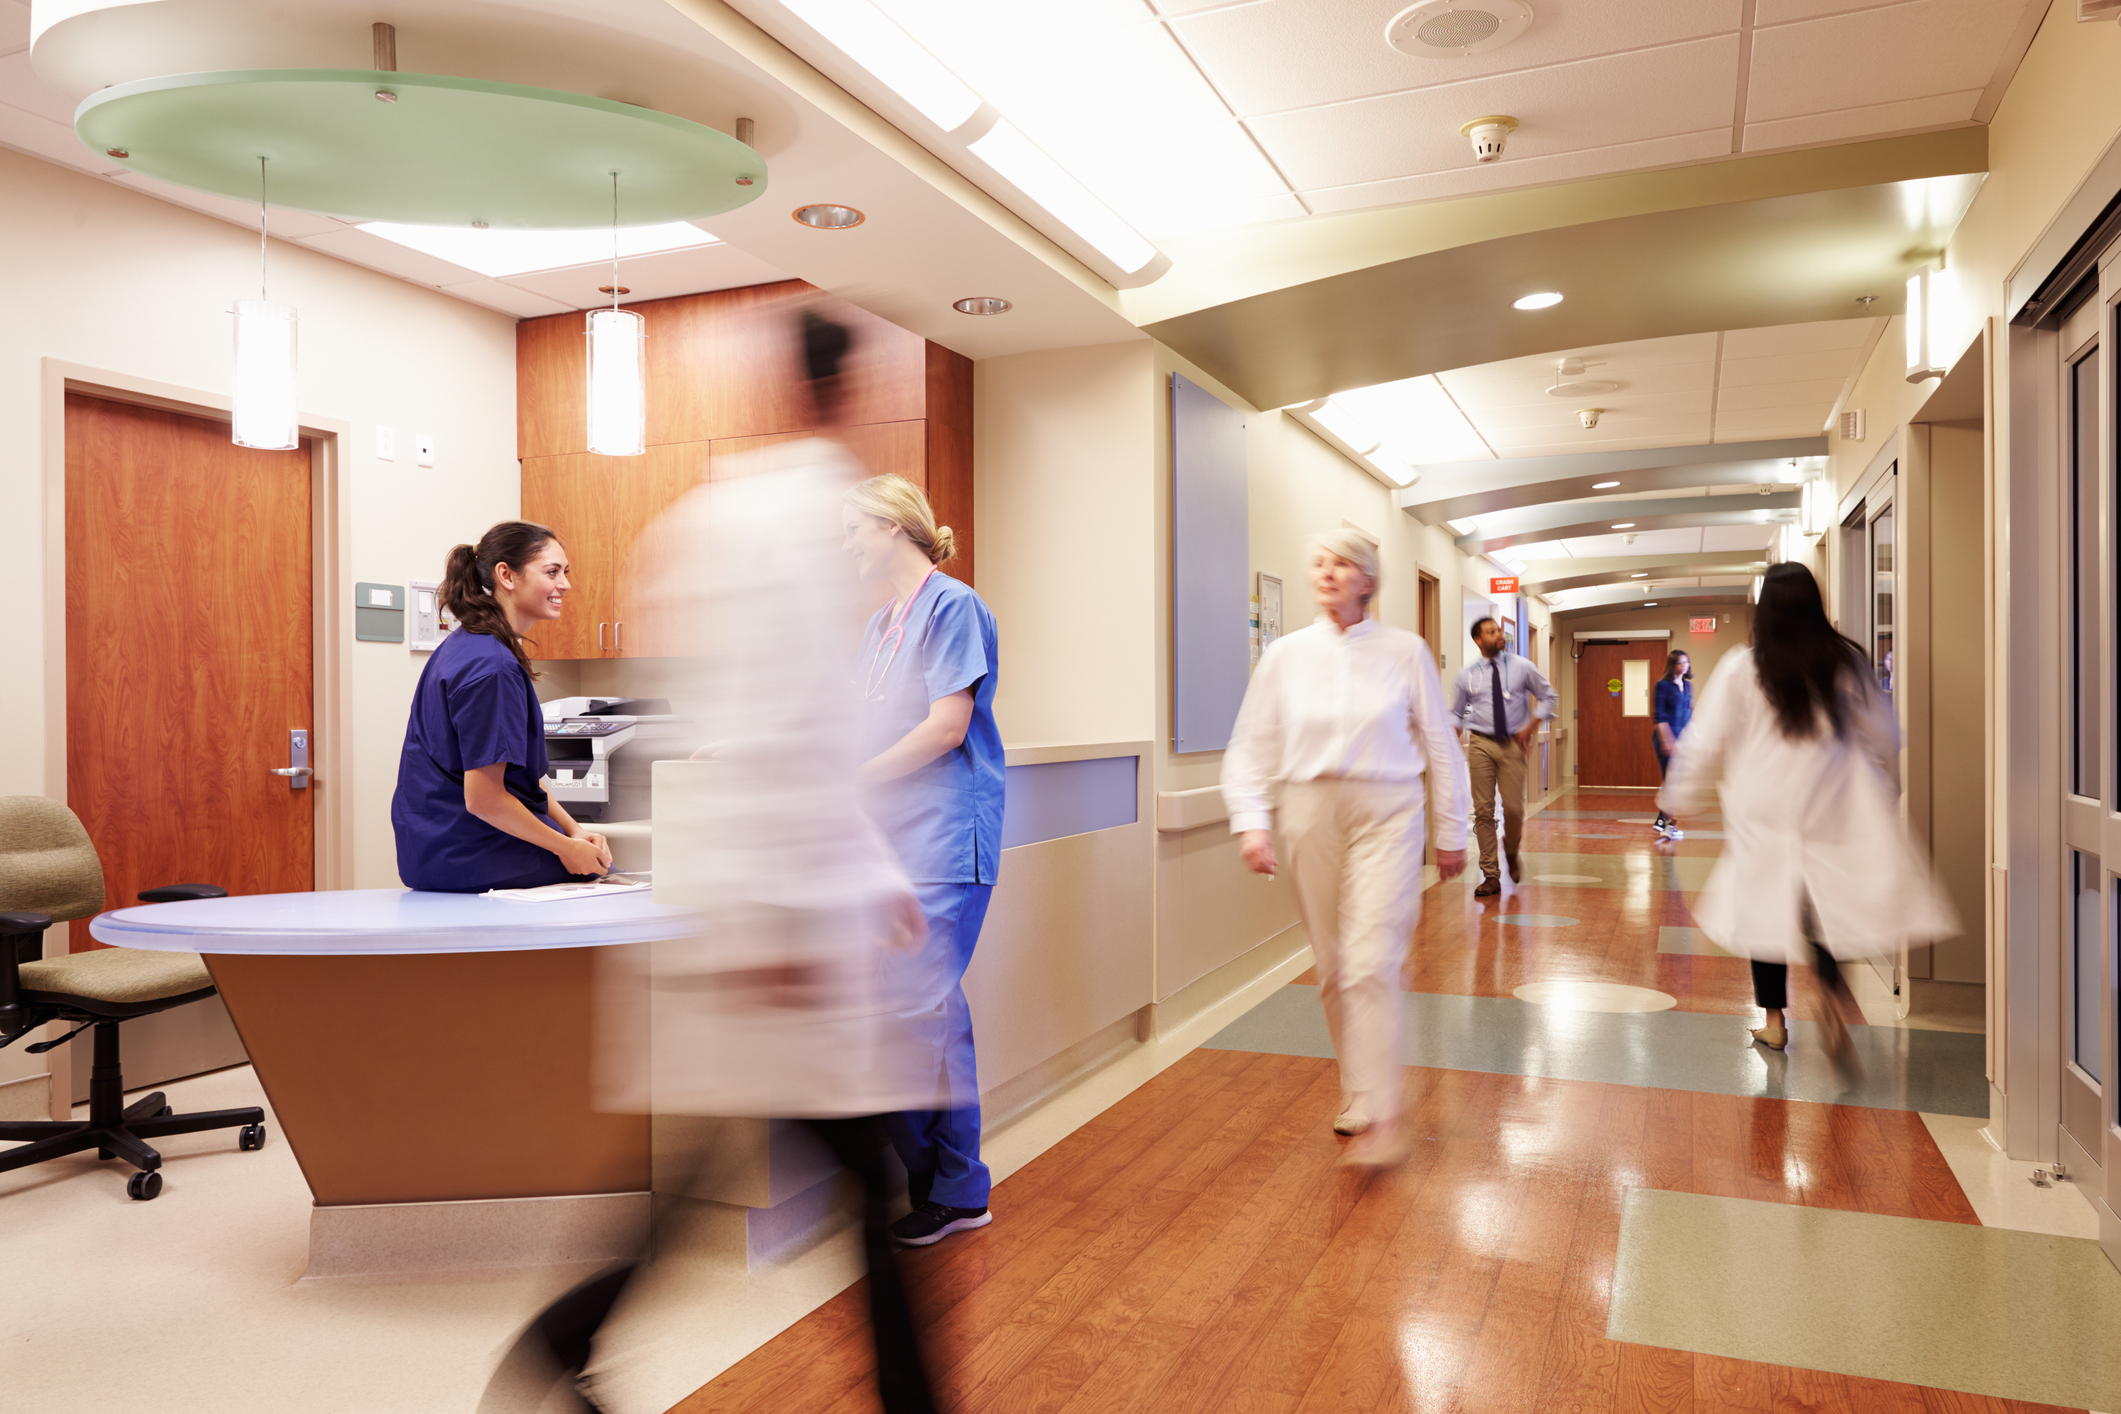 locum tenens definition - image of busy hospital floor